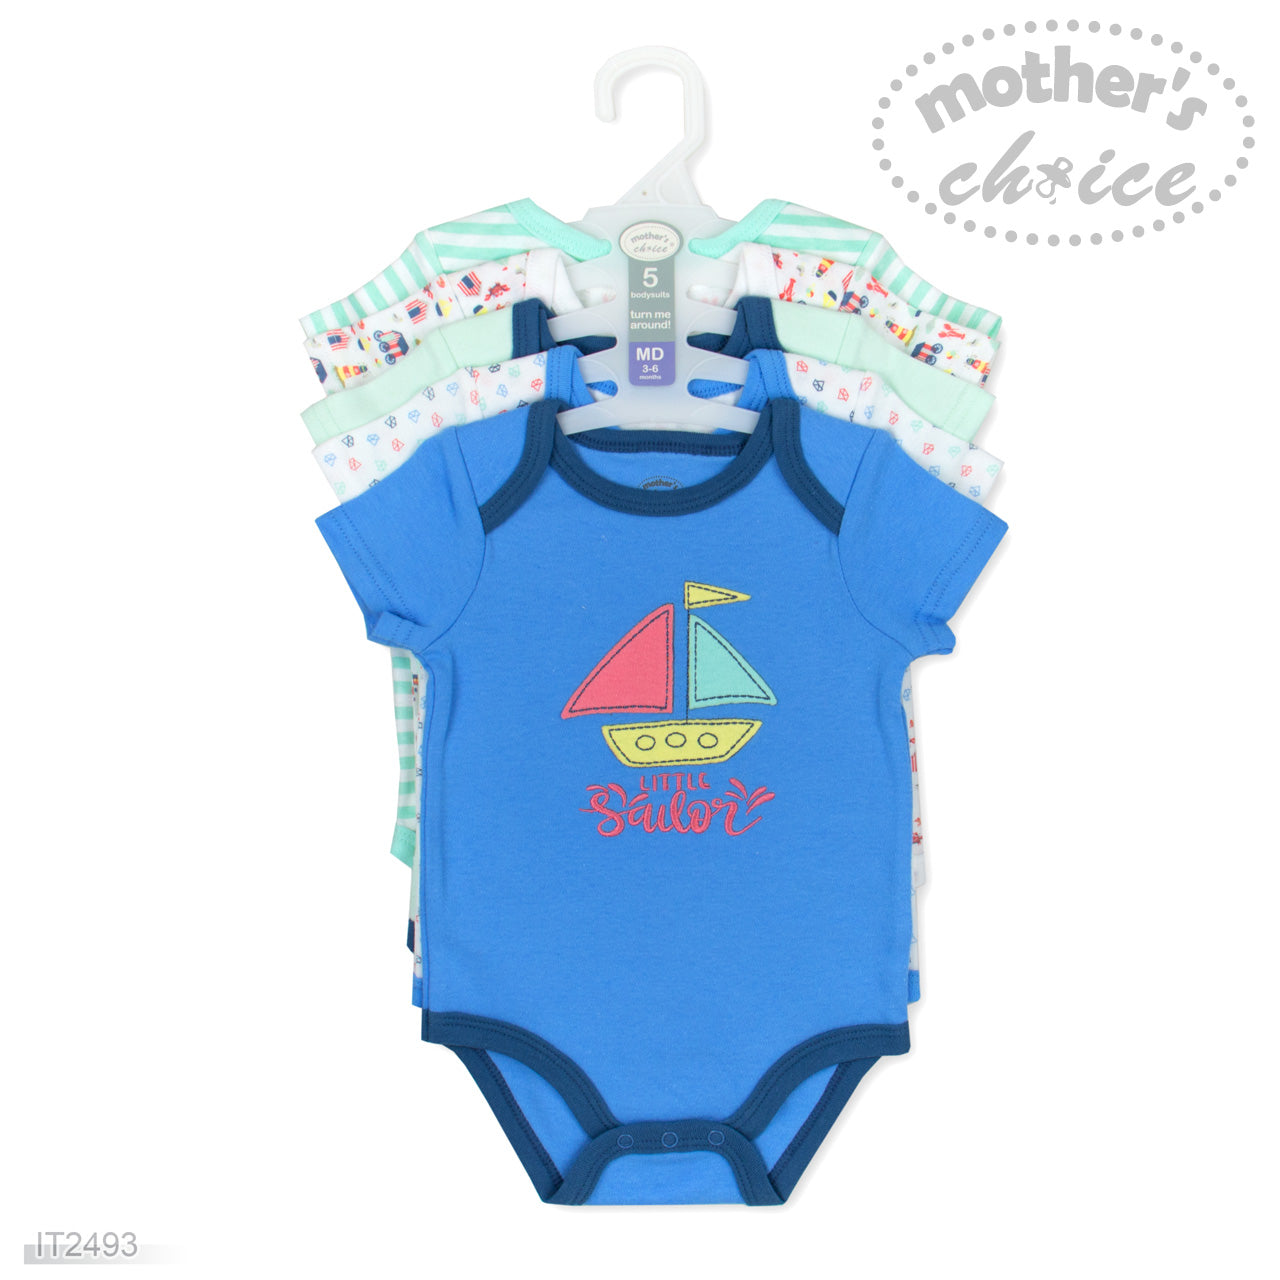 Mother's Choice 5 Pack Short Sleeve Onesie (Little Sailor/IT2493)